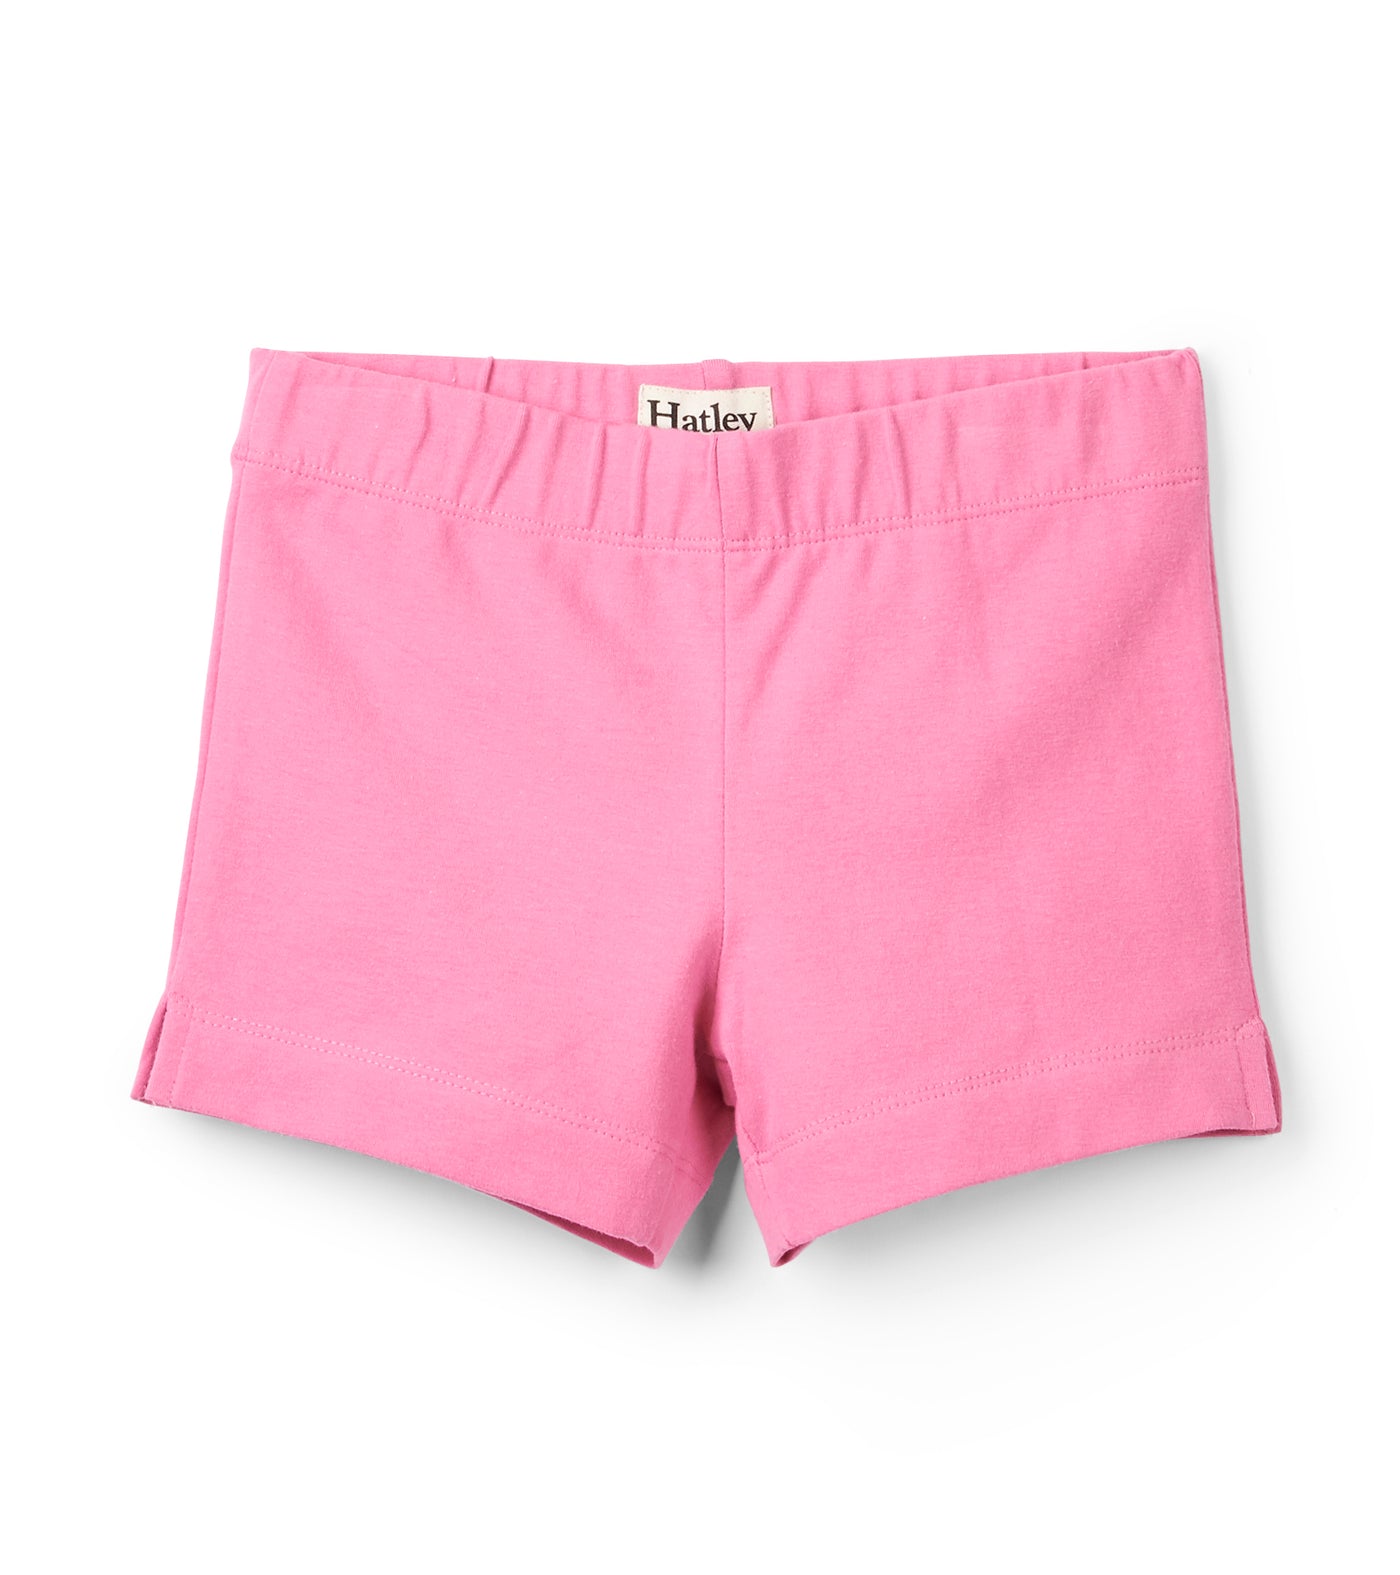 hatley basic bicycle shorts pink